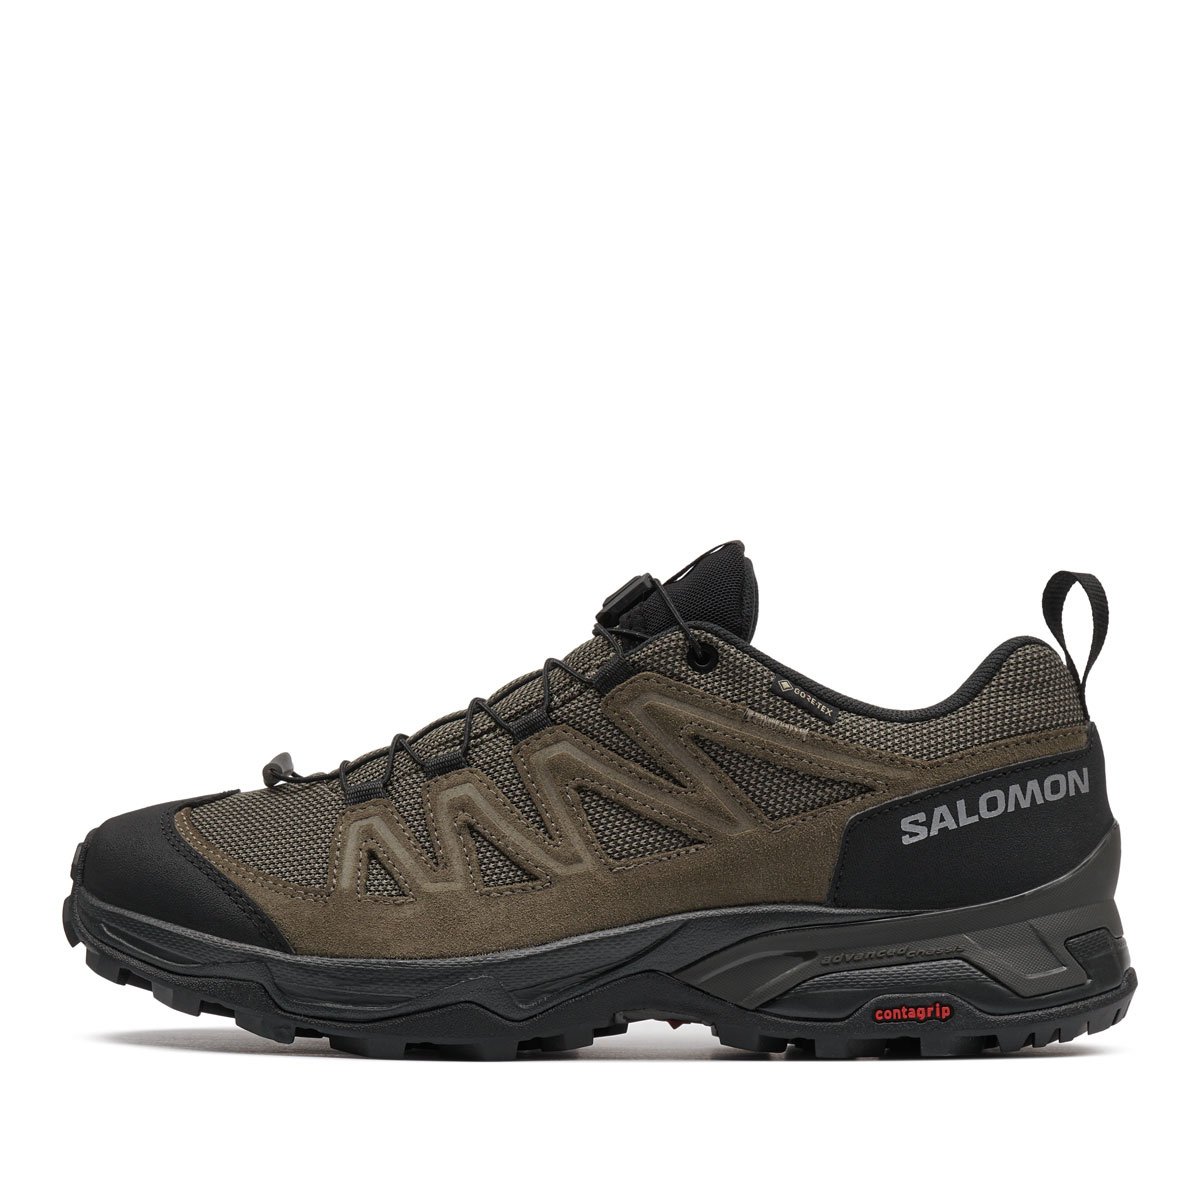 Salomon X Ward Leather Gore-Tex Мъжки спортни обувки 471822